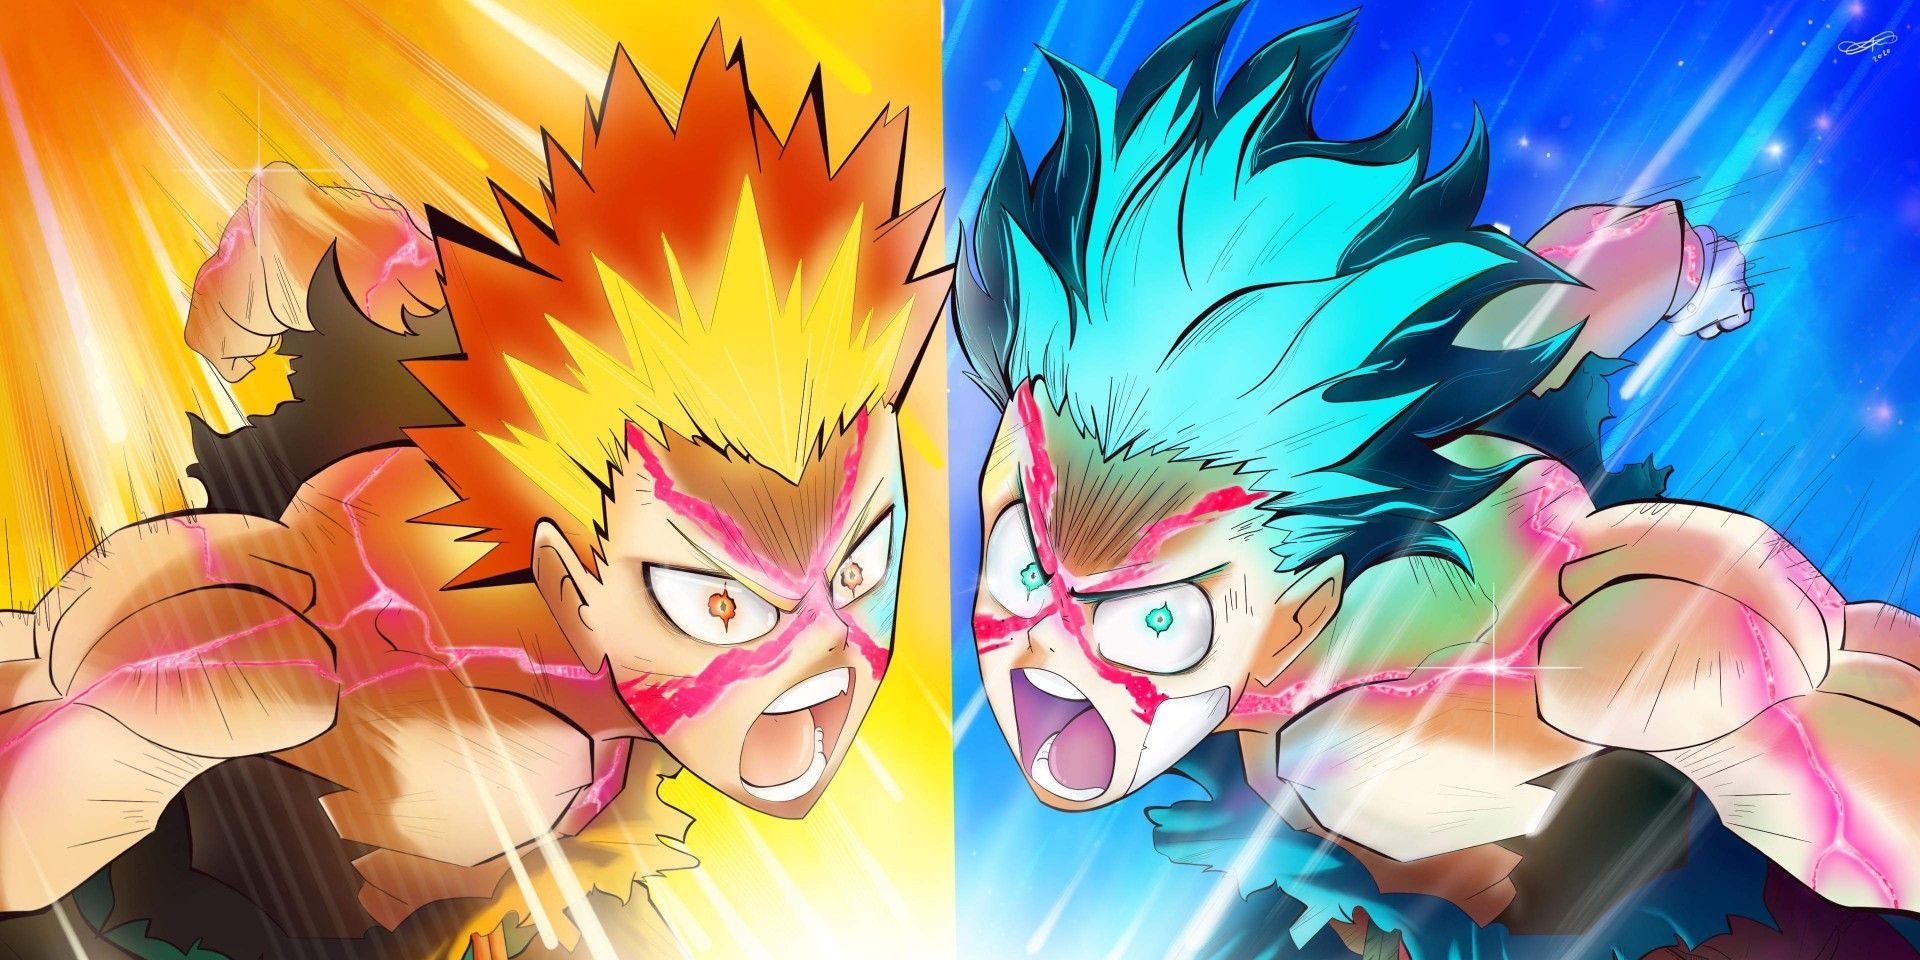 Bakugo and Midoriya fight power up